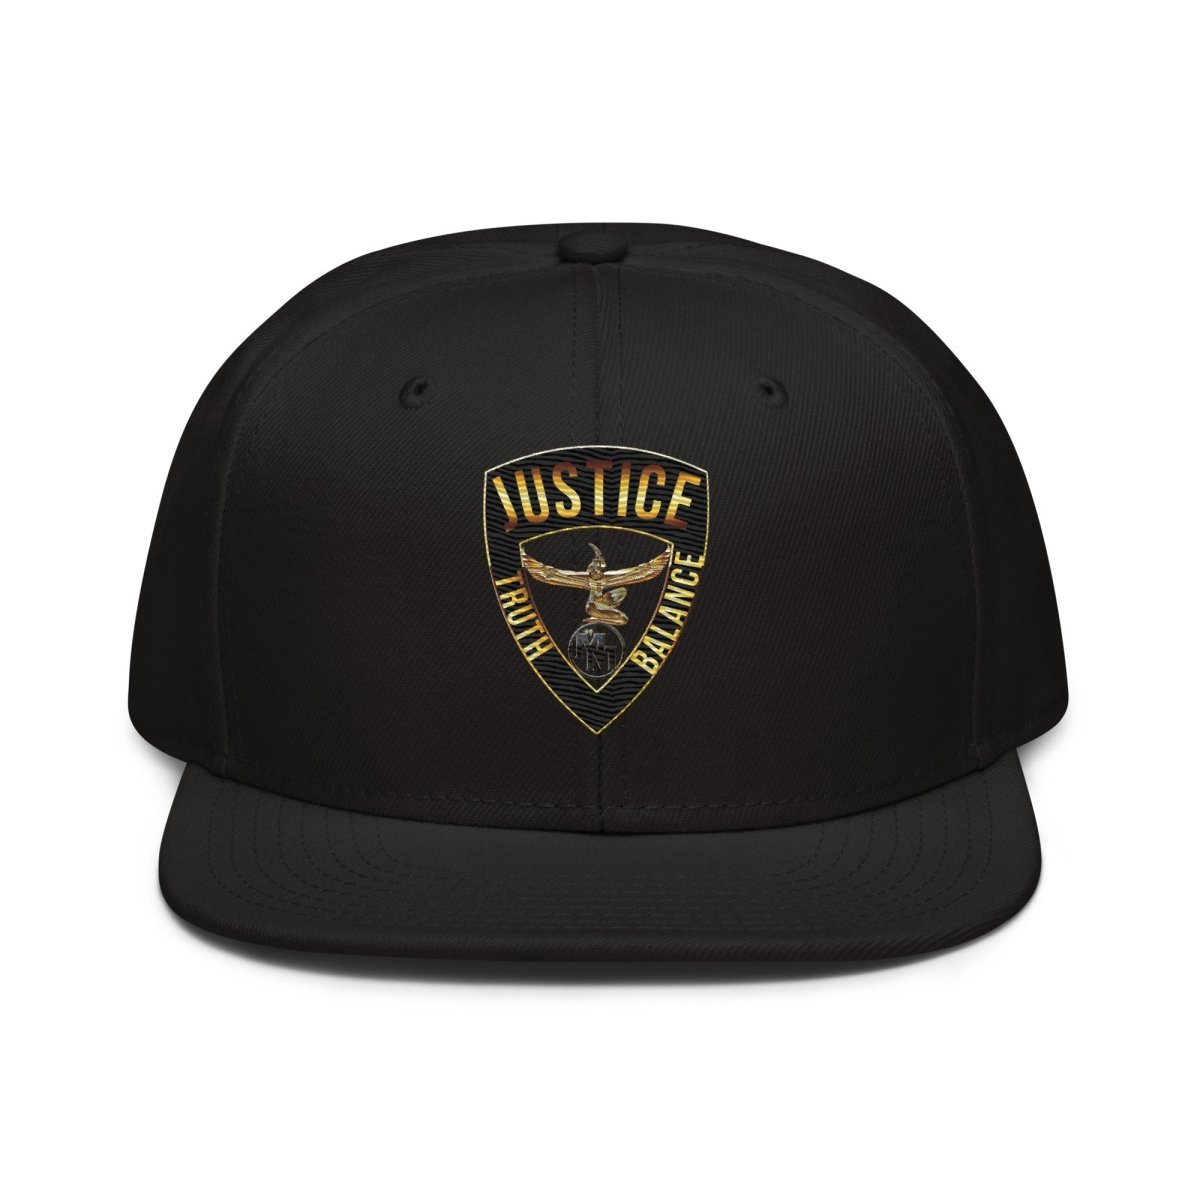 Justice Hats